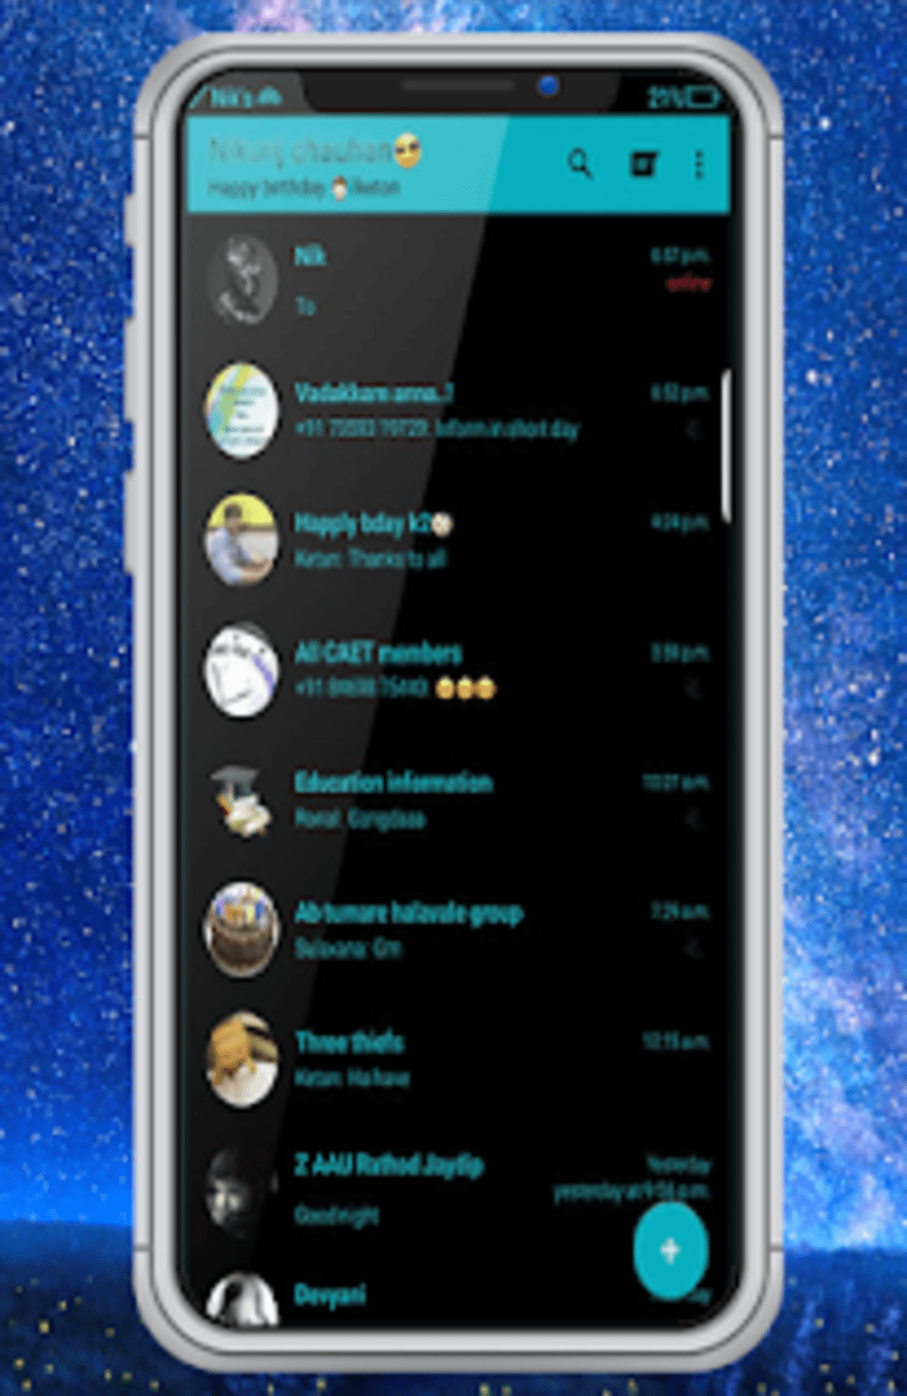 GB WA Warna Biru Terbaru APK untuk Android - Unduh